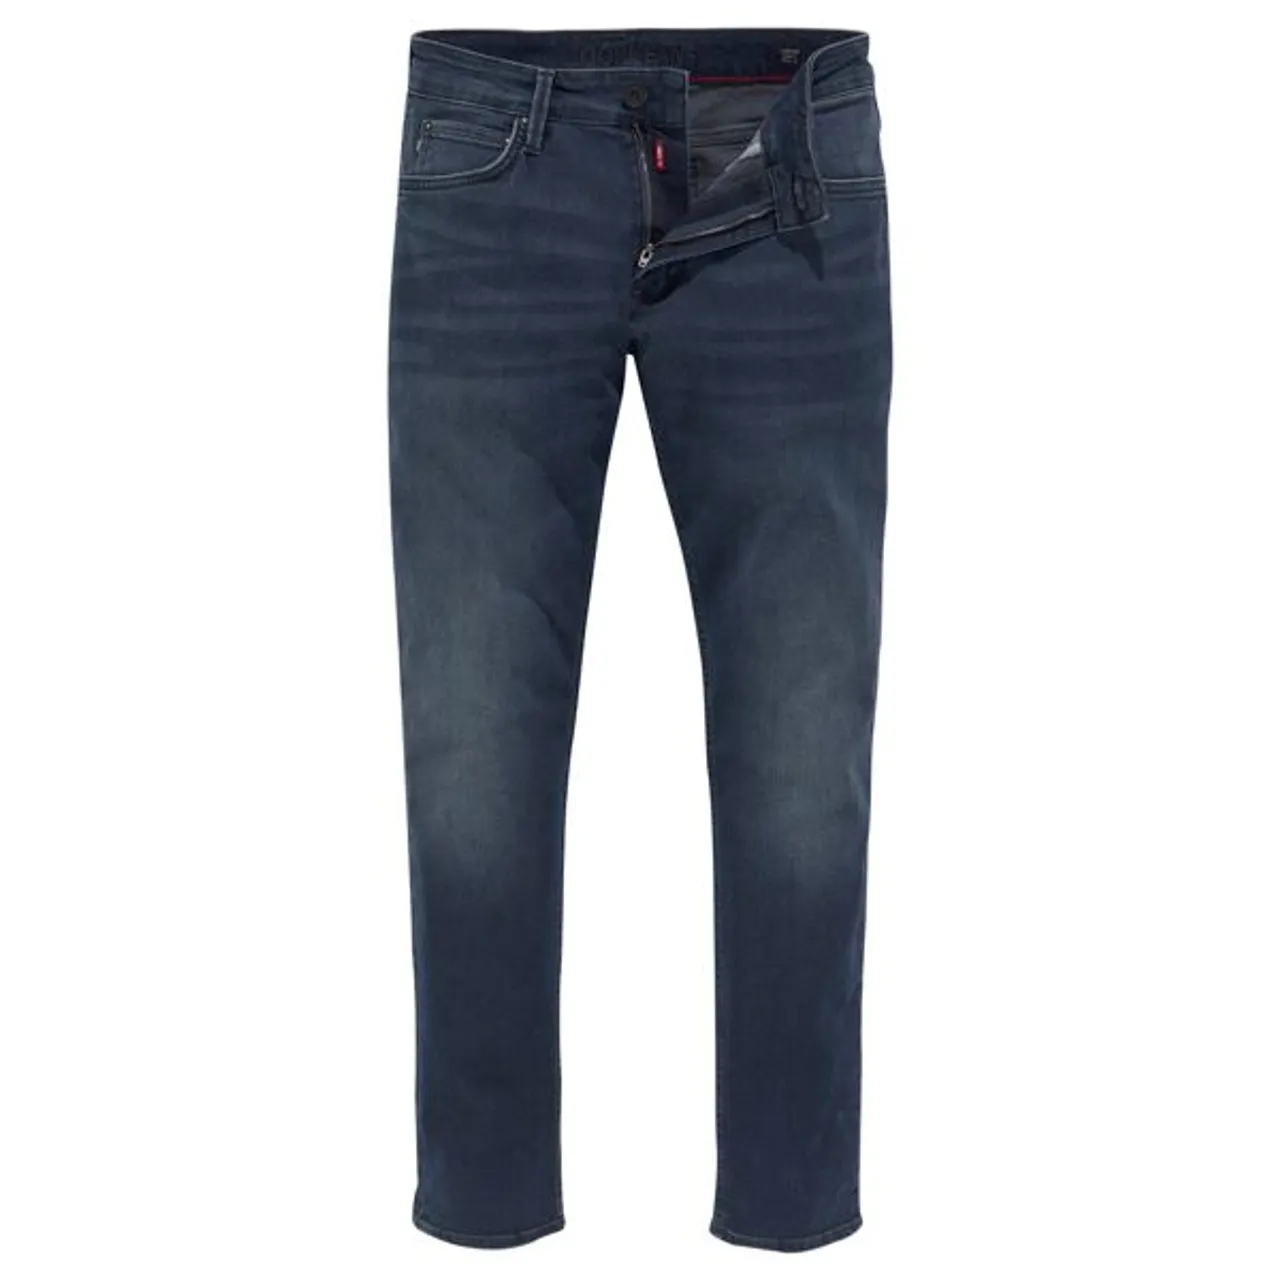 5-Pocket-Jeans JOOP JEANS "Stephen" Gr. 38, Länge 34, blau (navy used) Herren Jeans 5-Pocket-Jeans